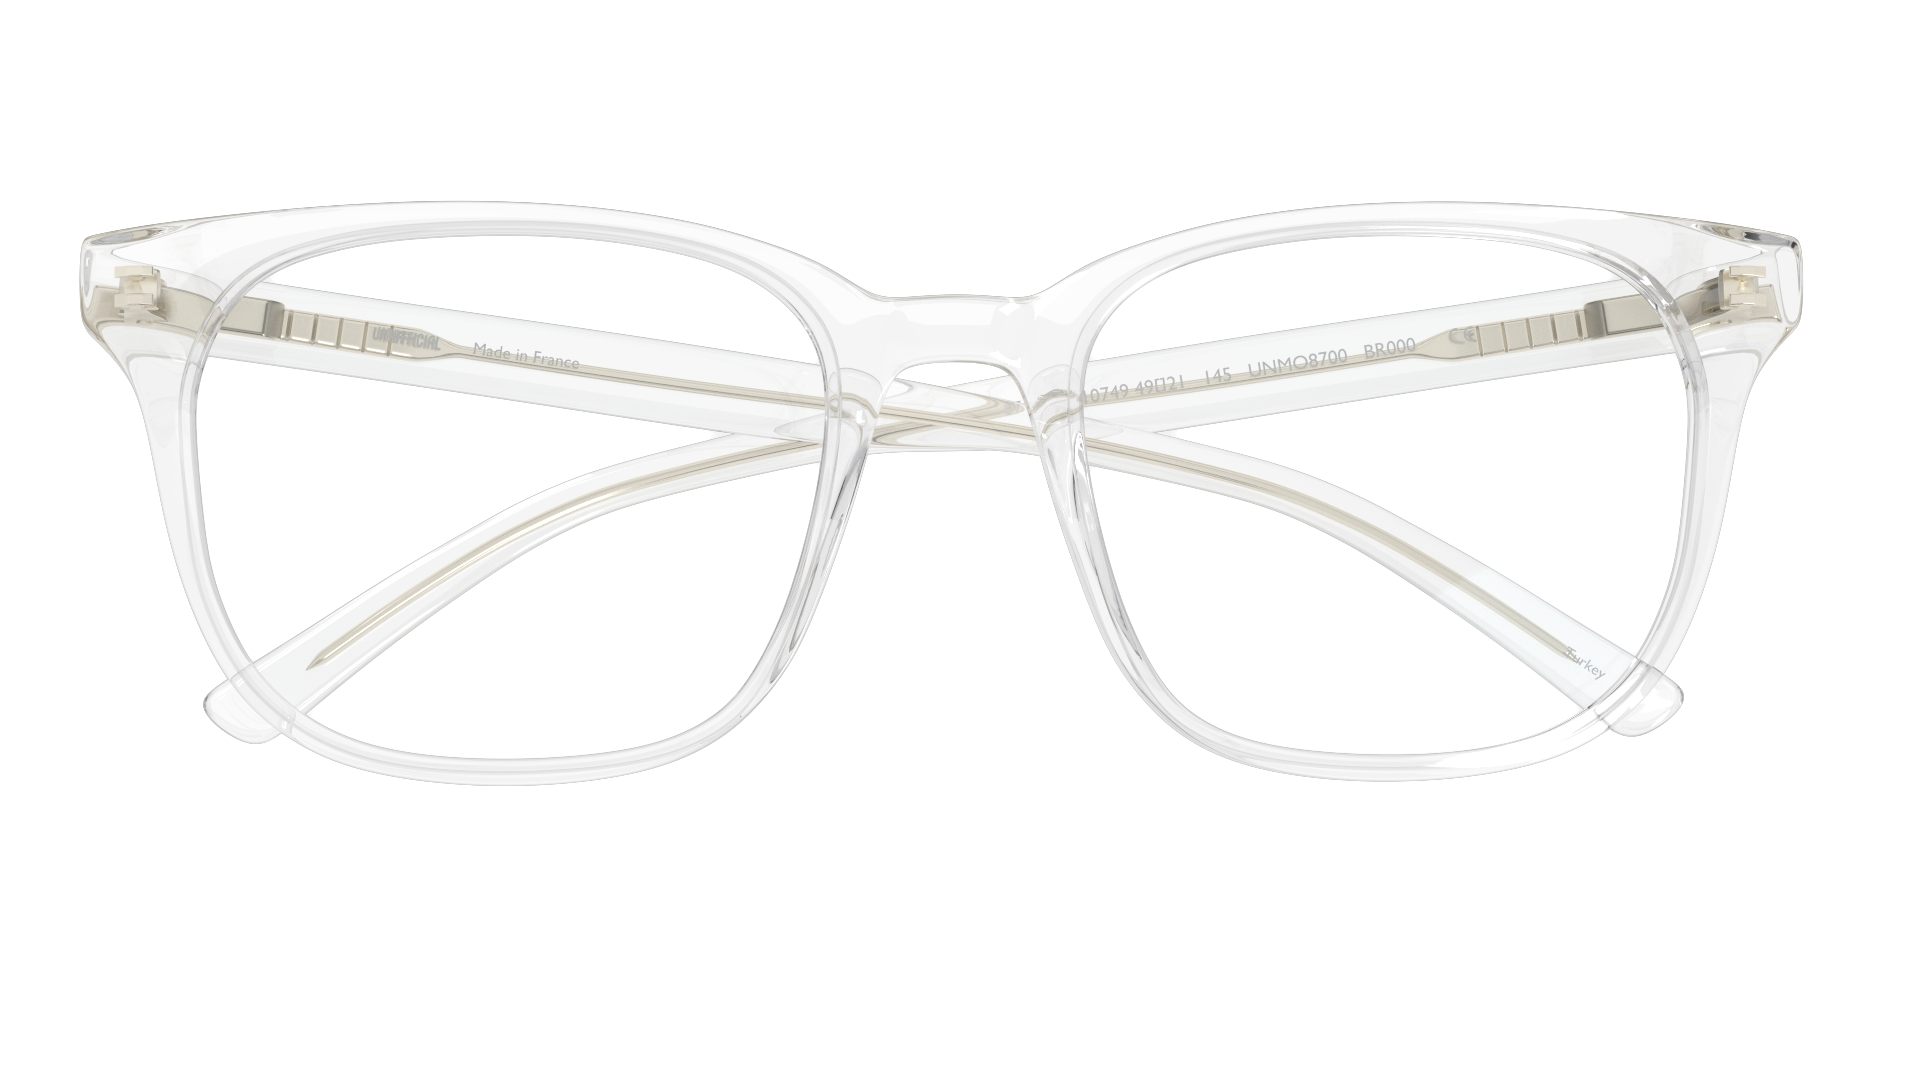 Folded Unofficial UNOM0225 Glasses Transparent / Transparent, Clear